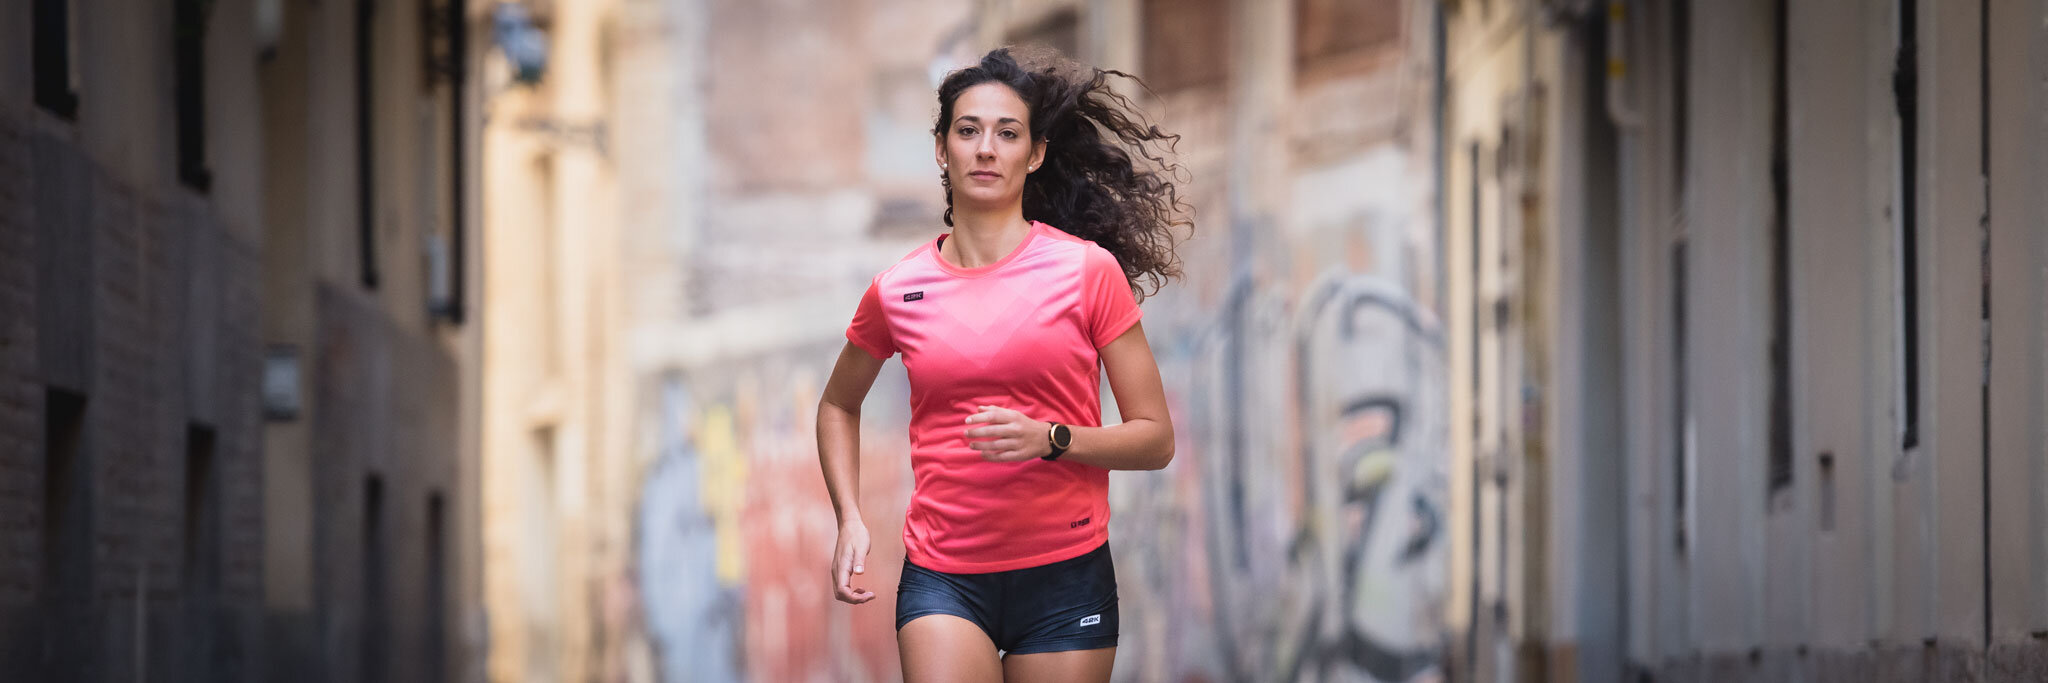 Running Mulheres - Vestuário running trilha de mulher running e poliesportivo